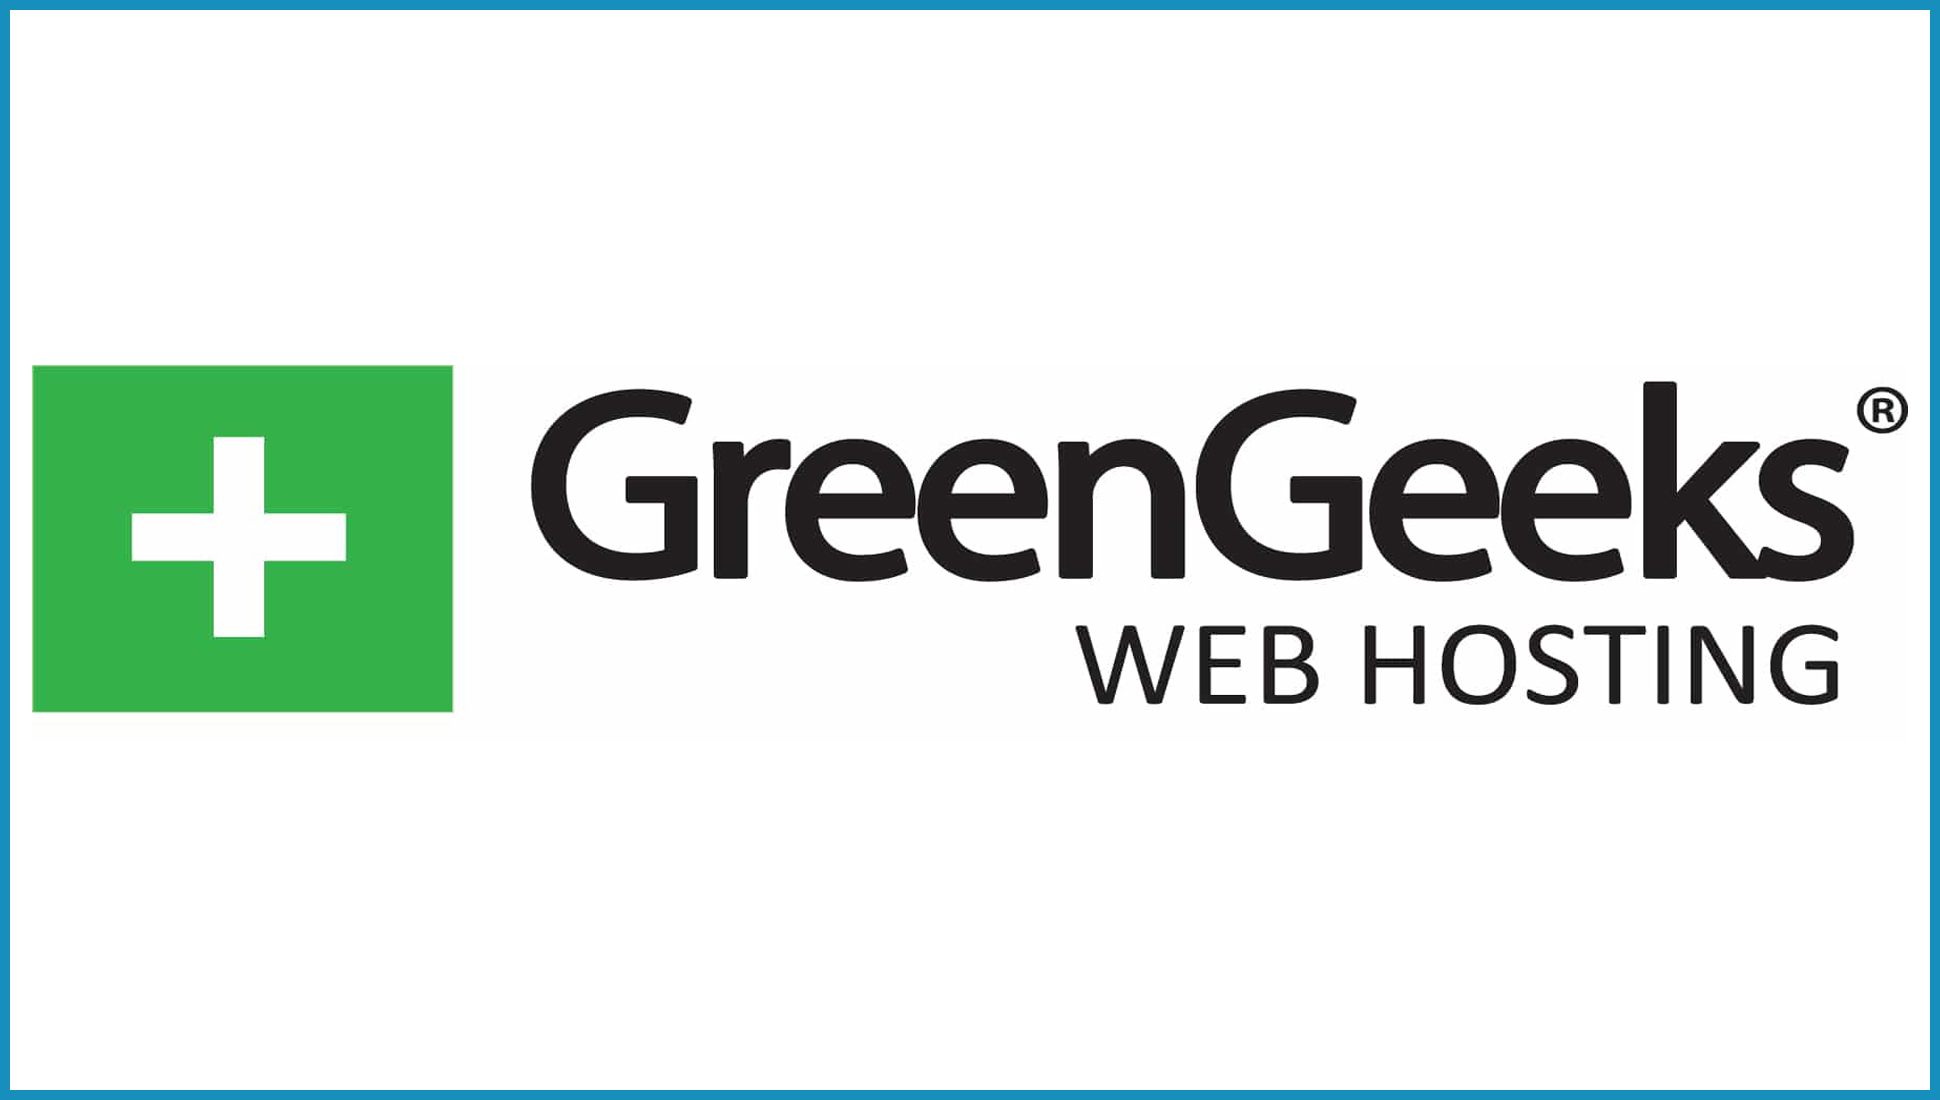 GreenGeeks-Logo